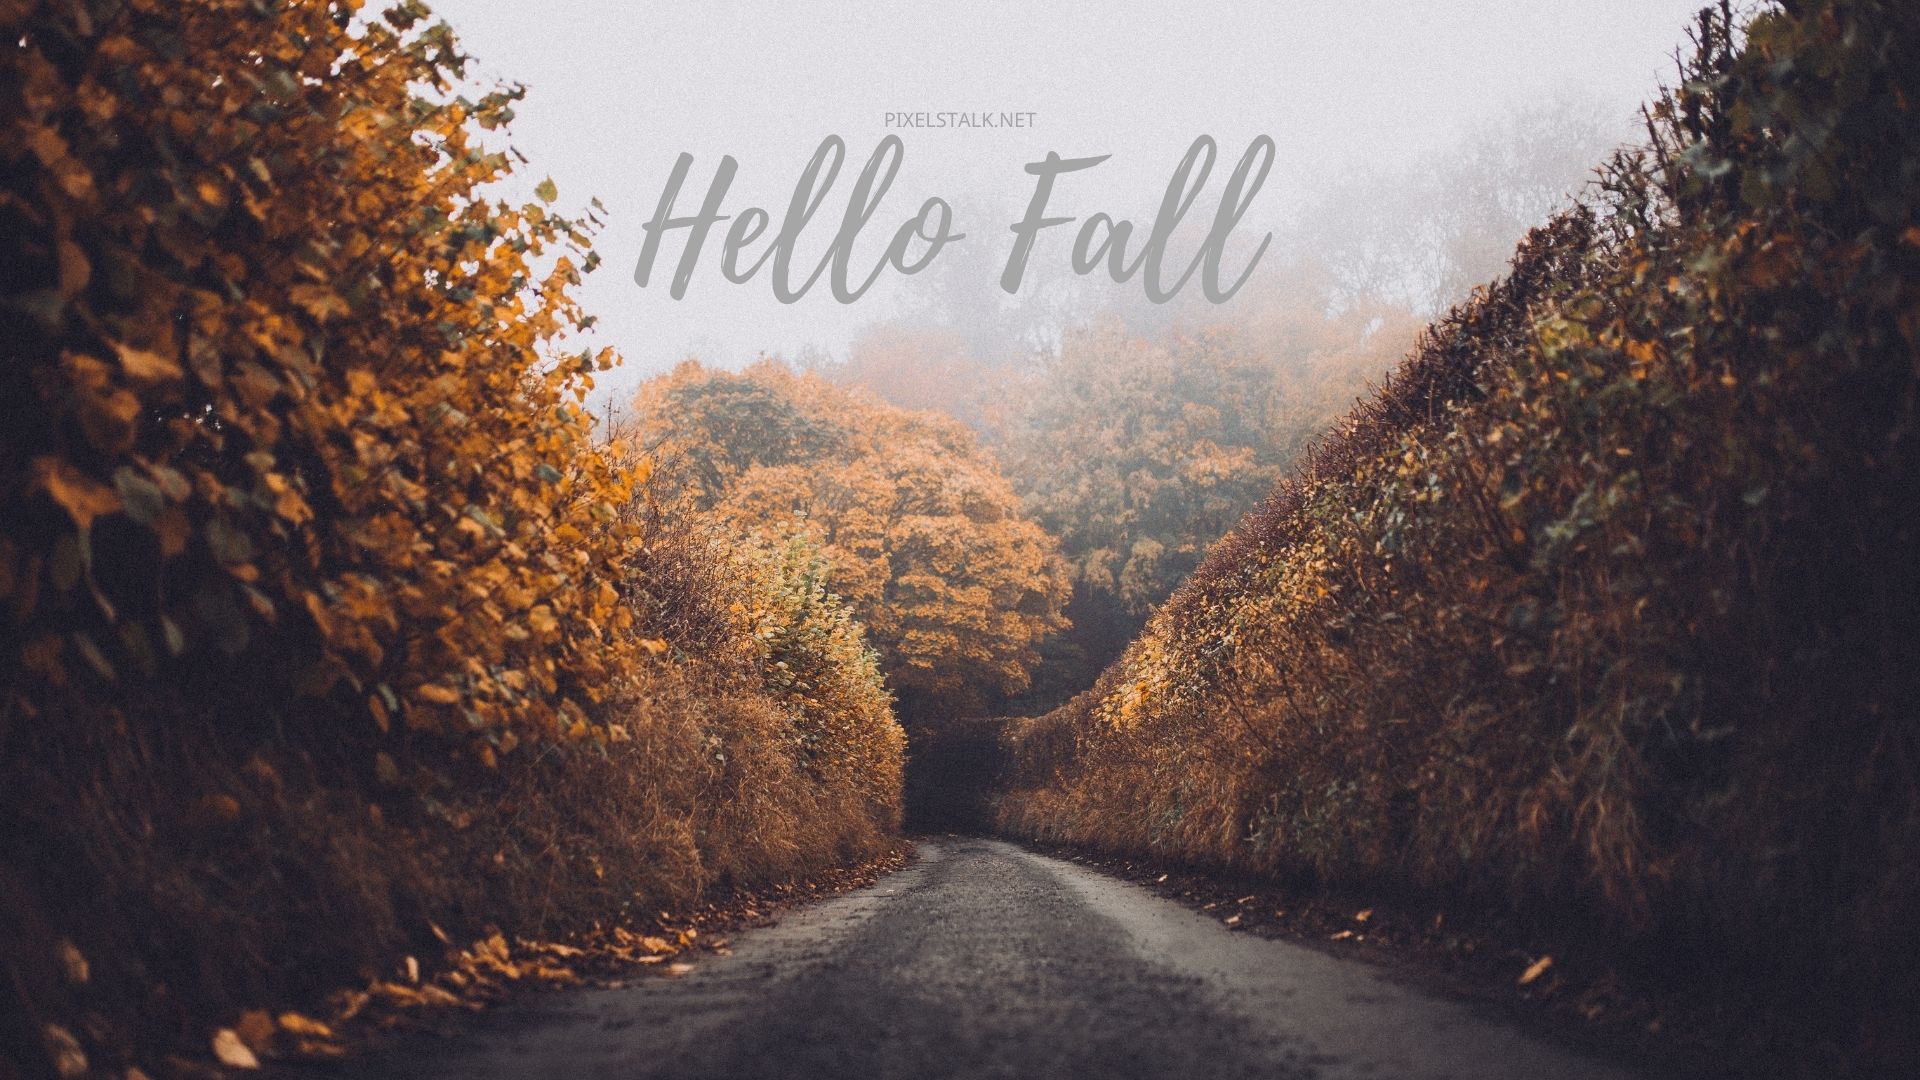 HD hello fall wallpapers